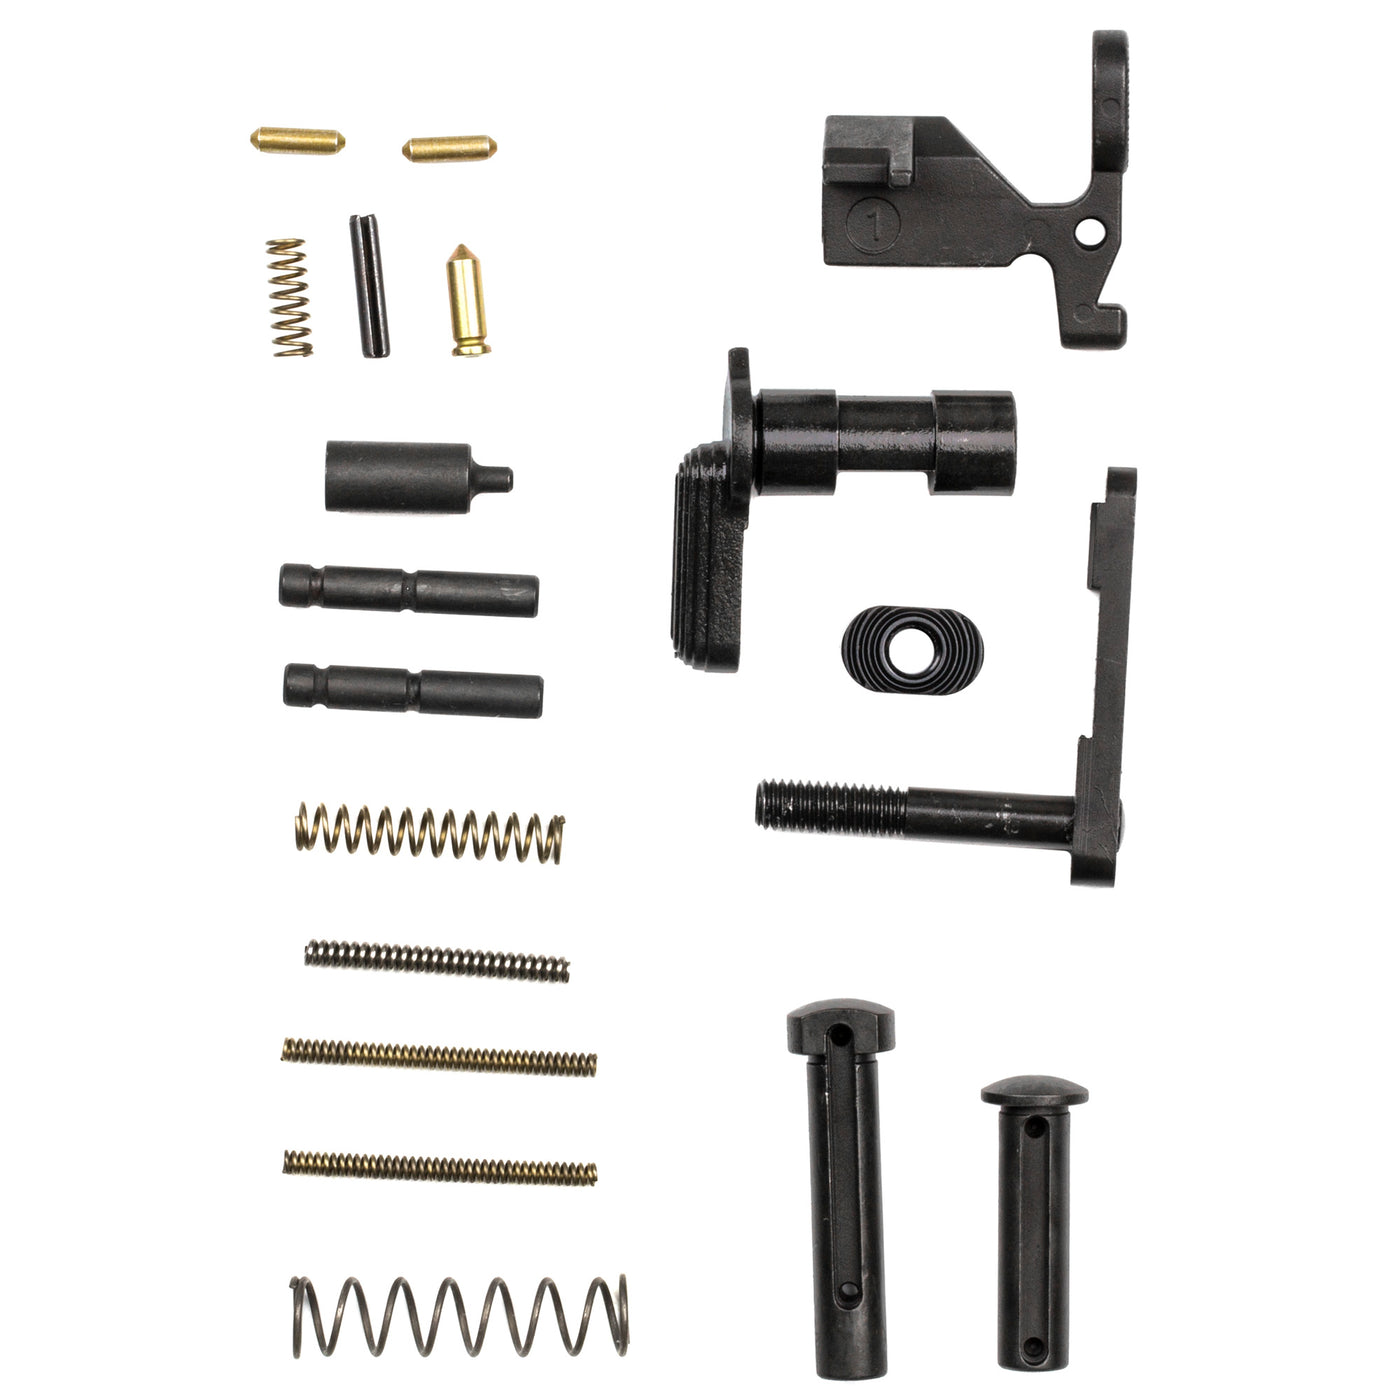 Rise Lower Parts Kit Ar-15 - Minus Trigger